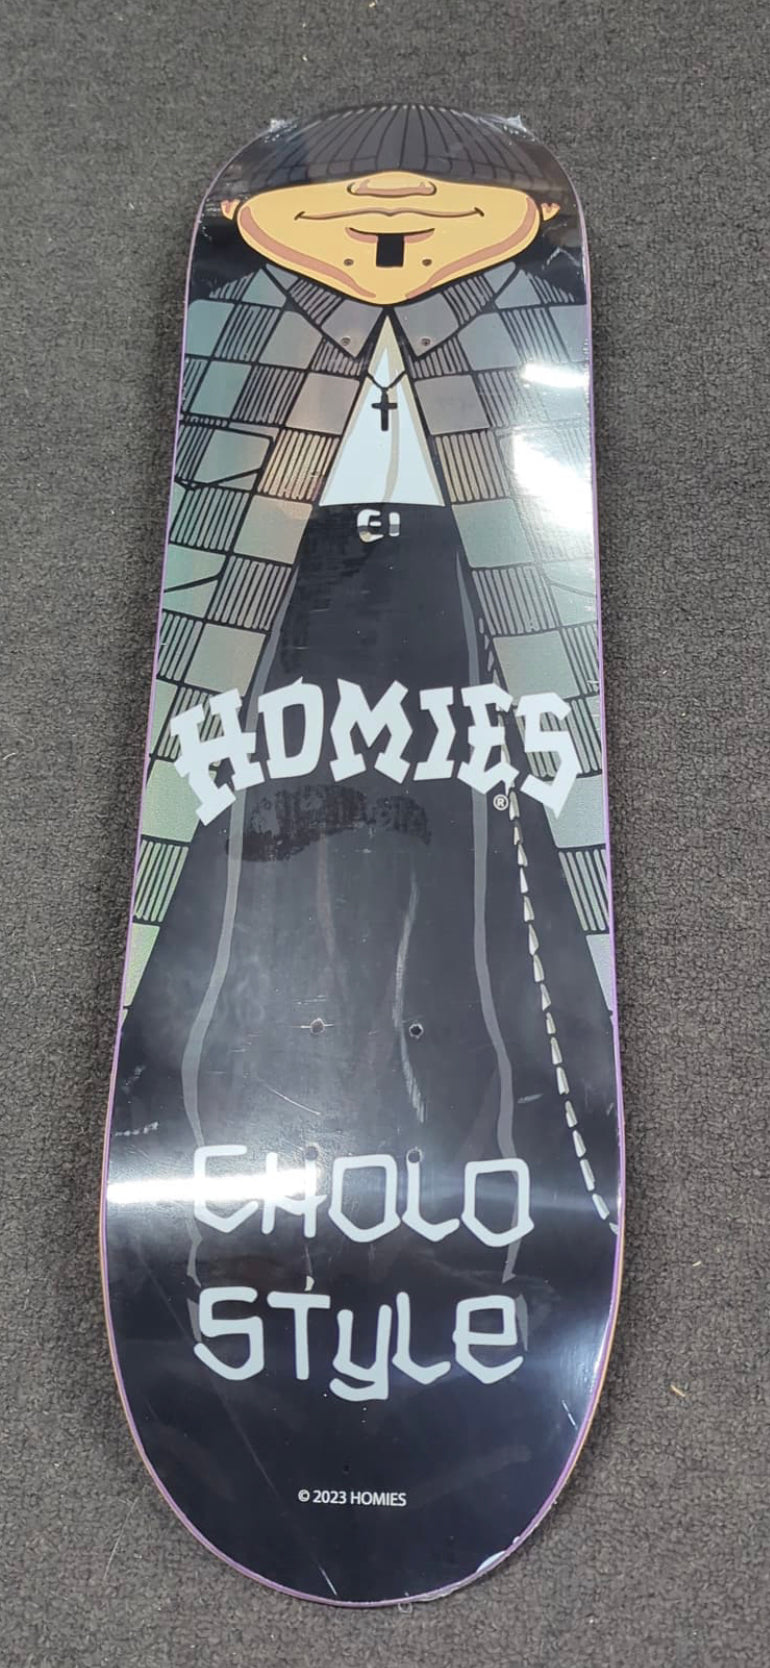 Homies skateboard Cholo Style